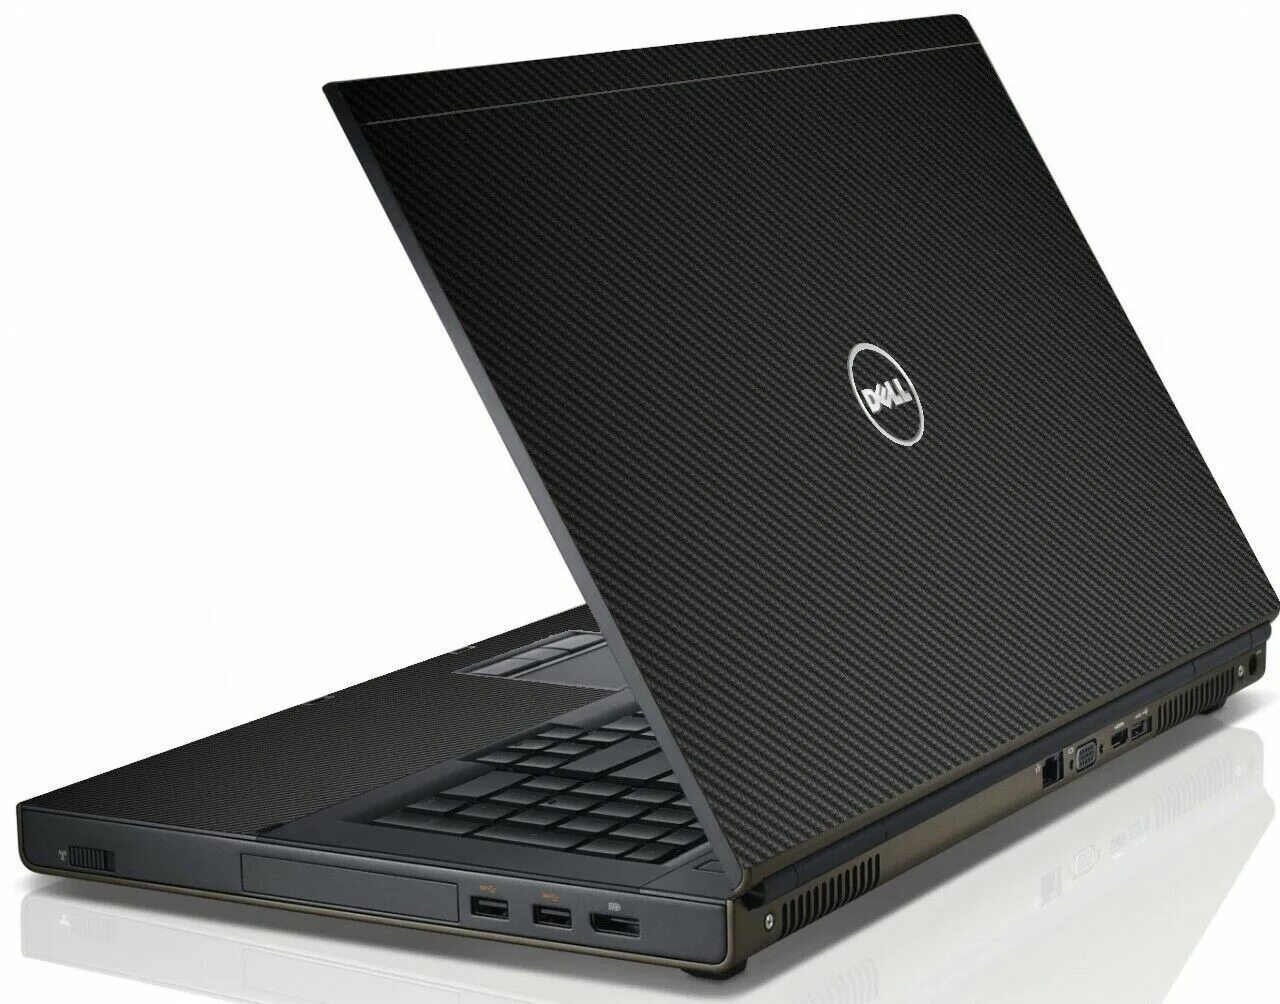 Ноутбук в металлическом корпусе. Dell Precision m4800. Dell карбон. Ноут Делл 2013г. Ноутбук Делл 2 ядра черный карбон.